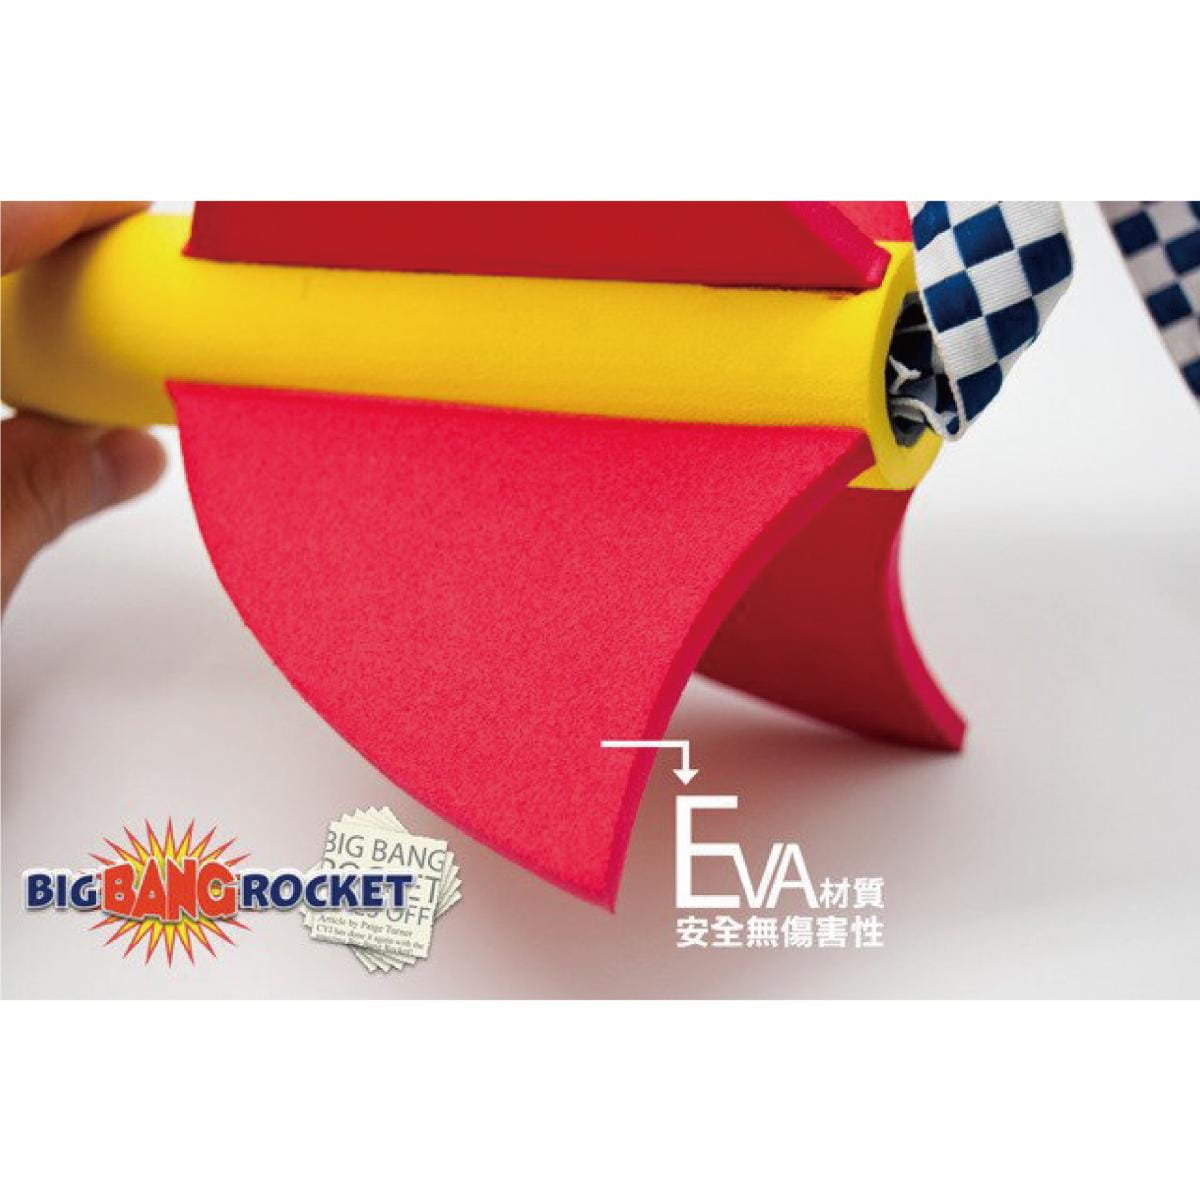 【現貨】Big bang rocket 火箭炮  趣味玩具 1